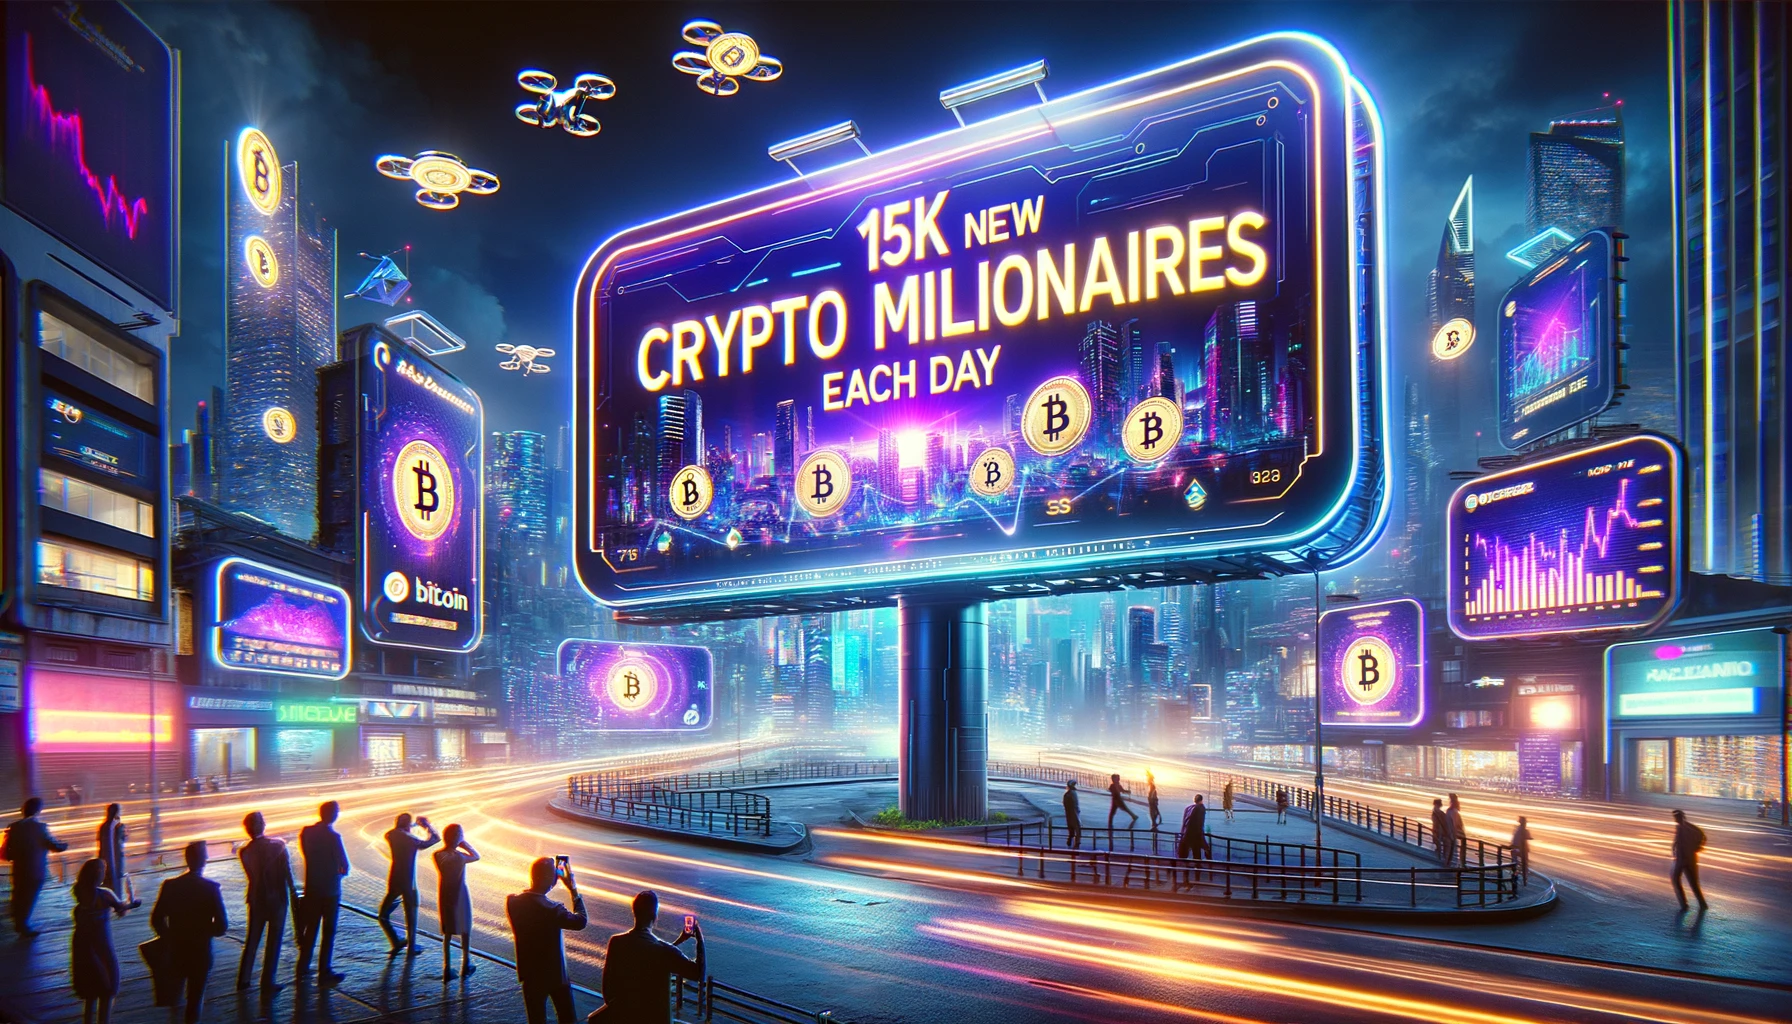 Record Breaking Btc Rally Creates 15k New Crypto Millionaires Every Day Analysis Shows 0699